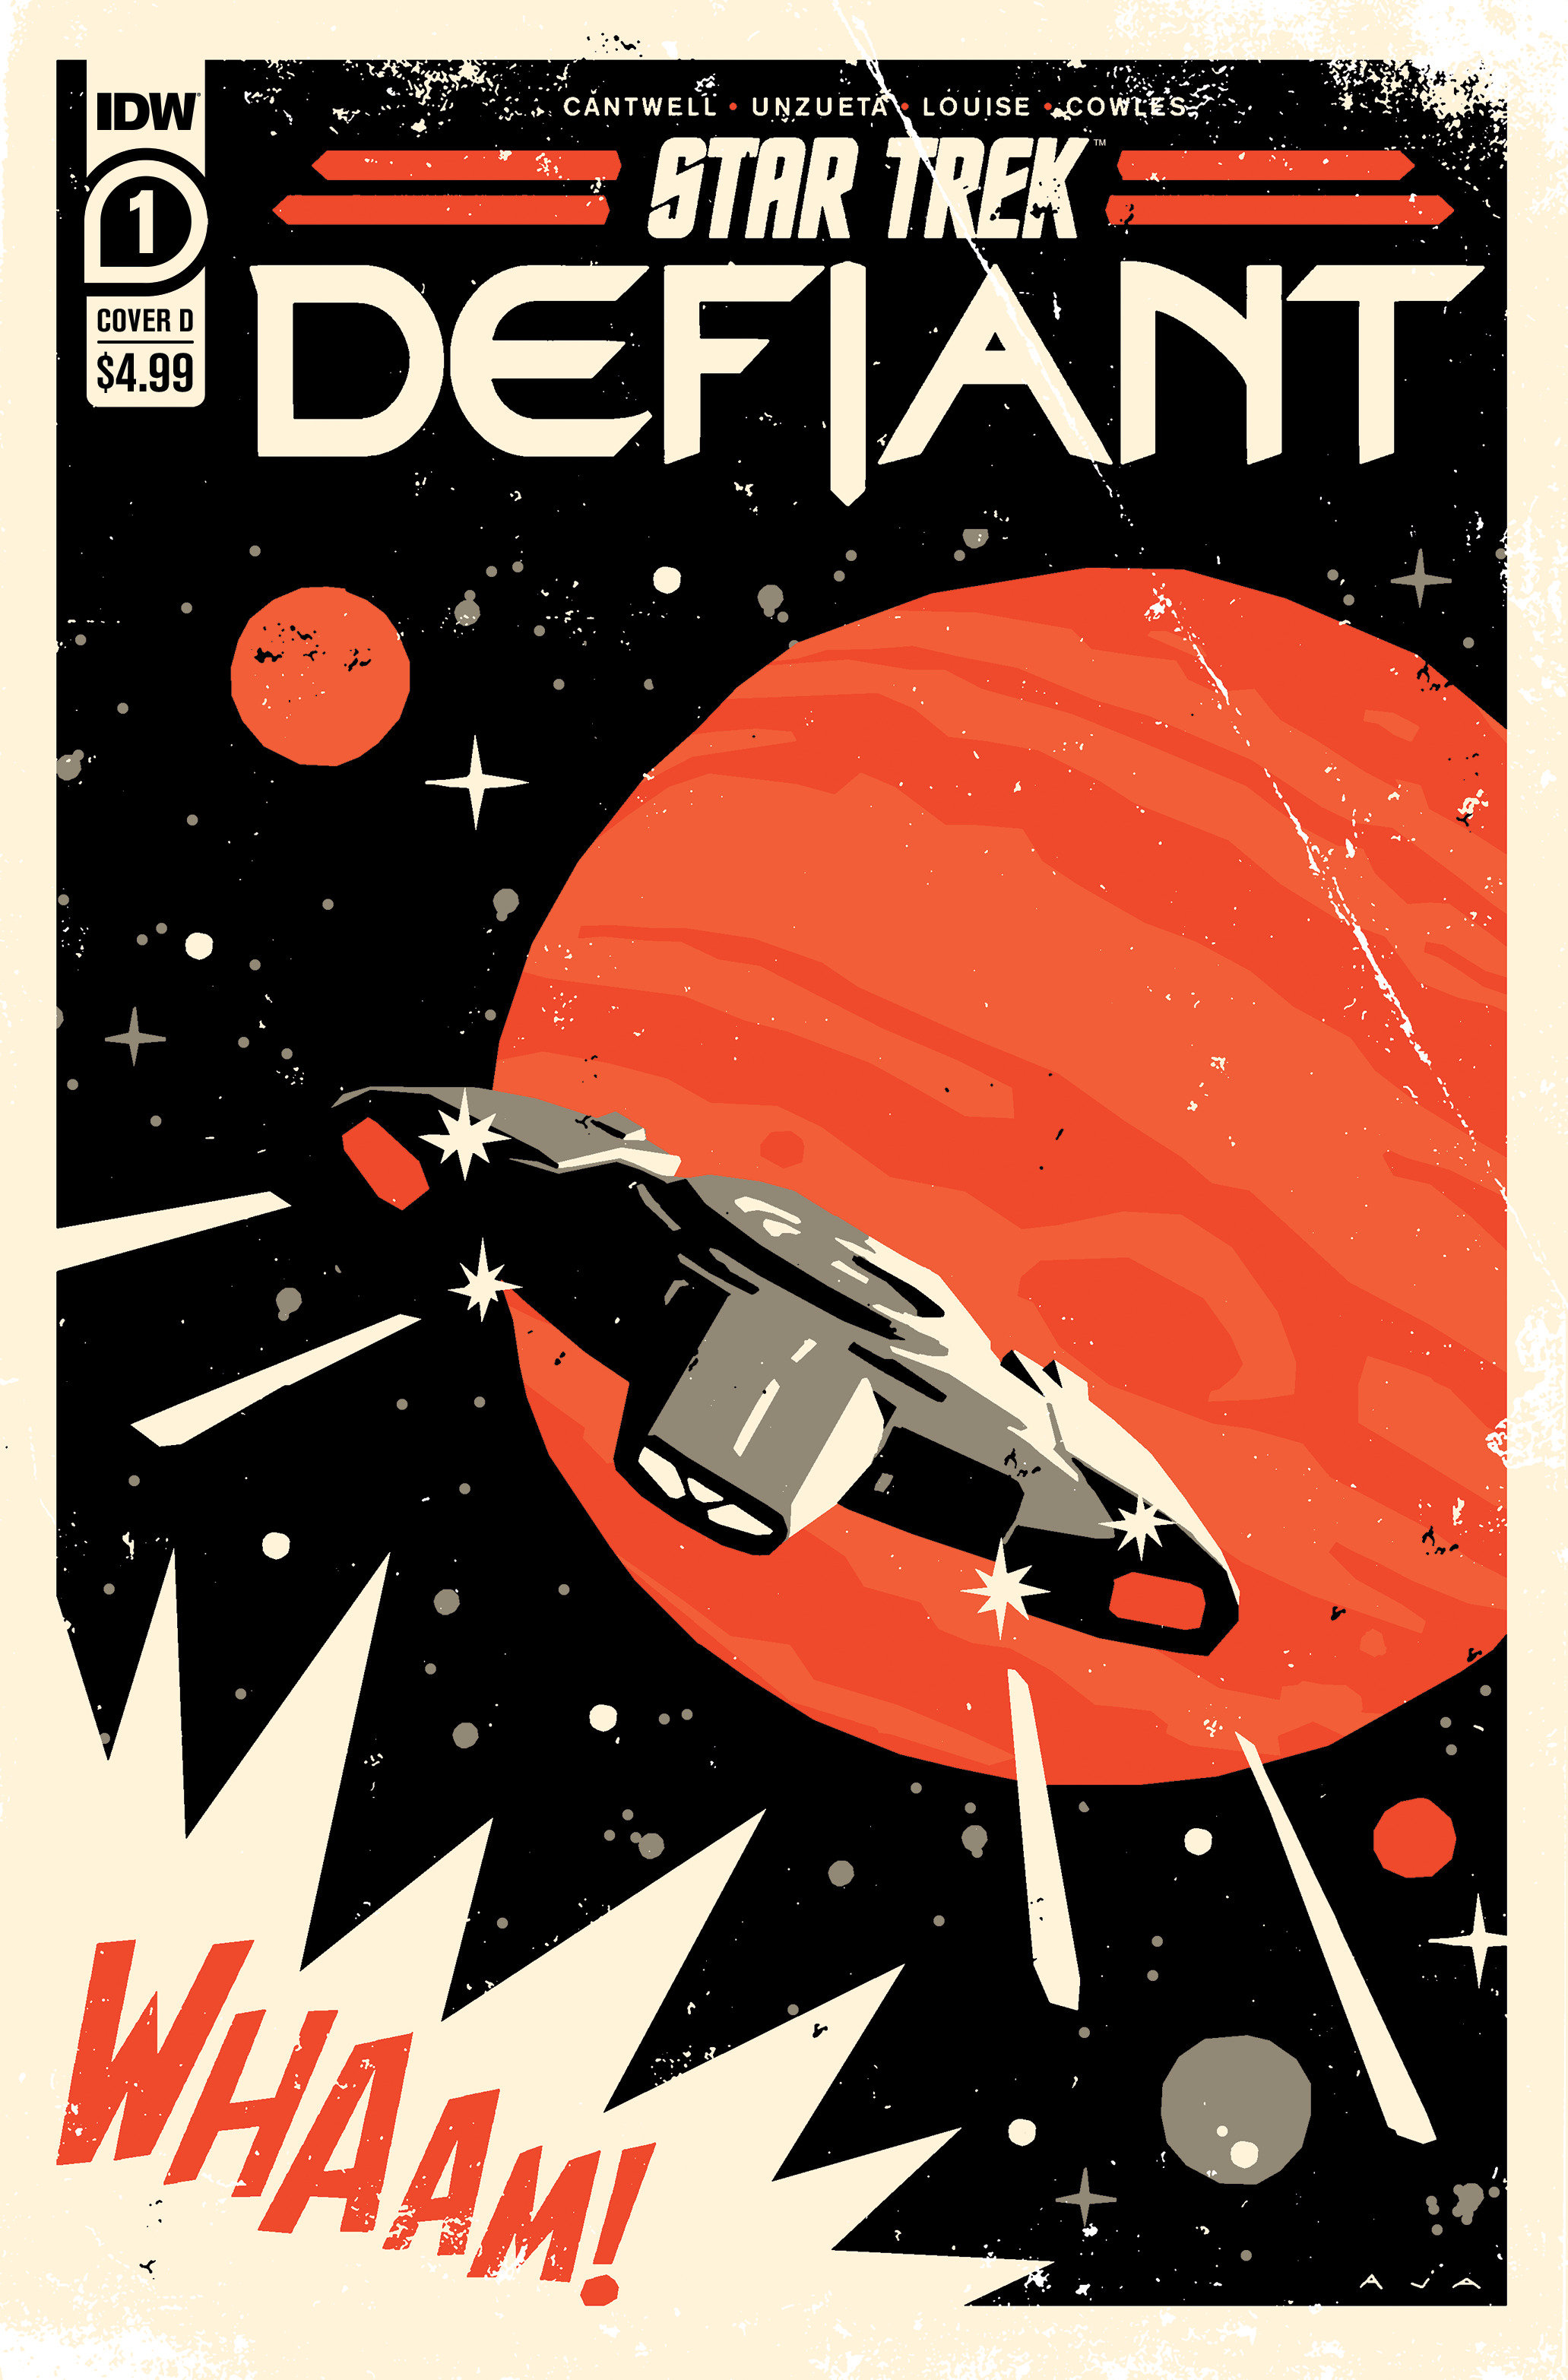 Star Trek: Defiant #1 Cover D Aja